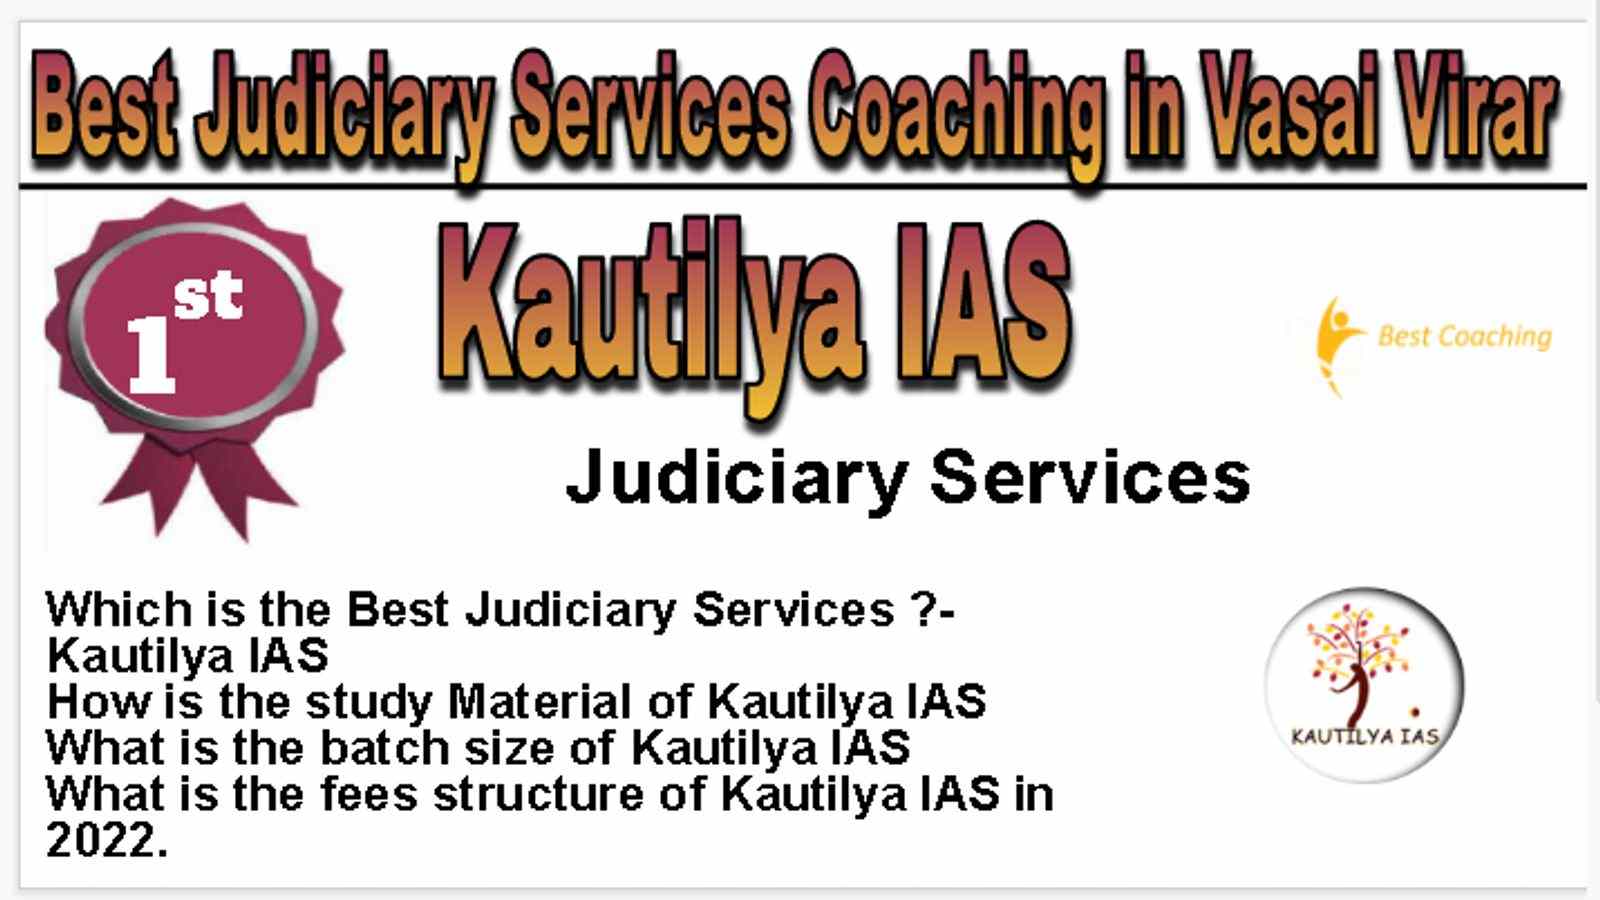 Rank 1 Best Judiciary Services Coaching in Vasai and Virar